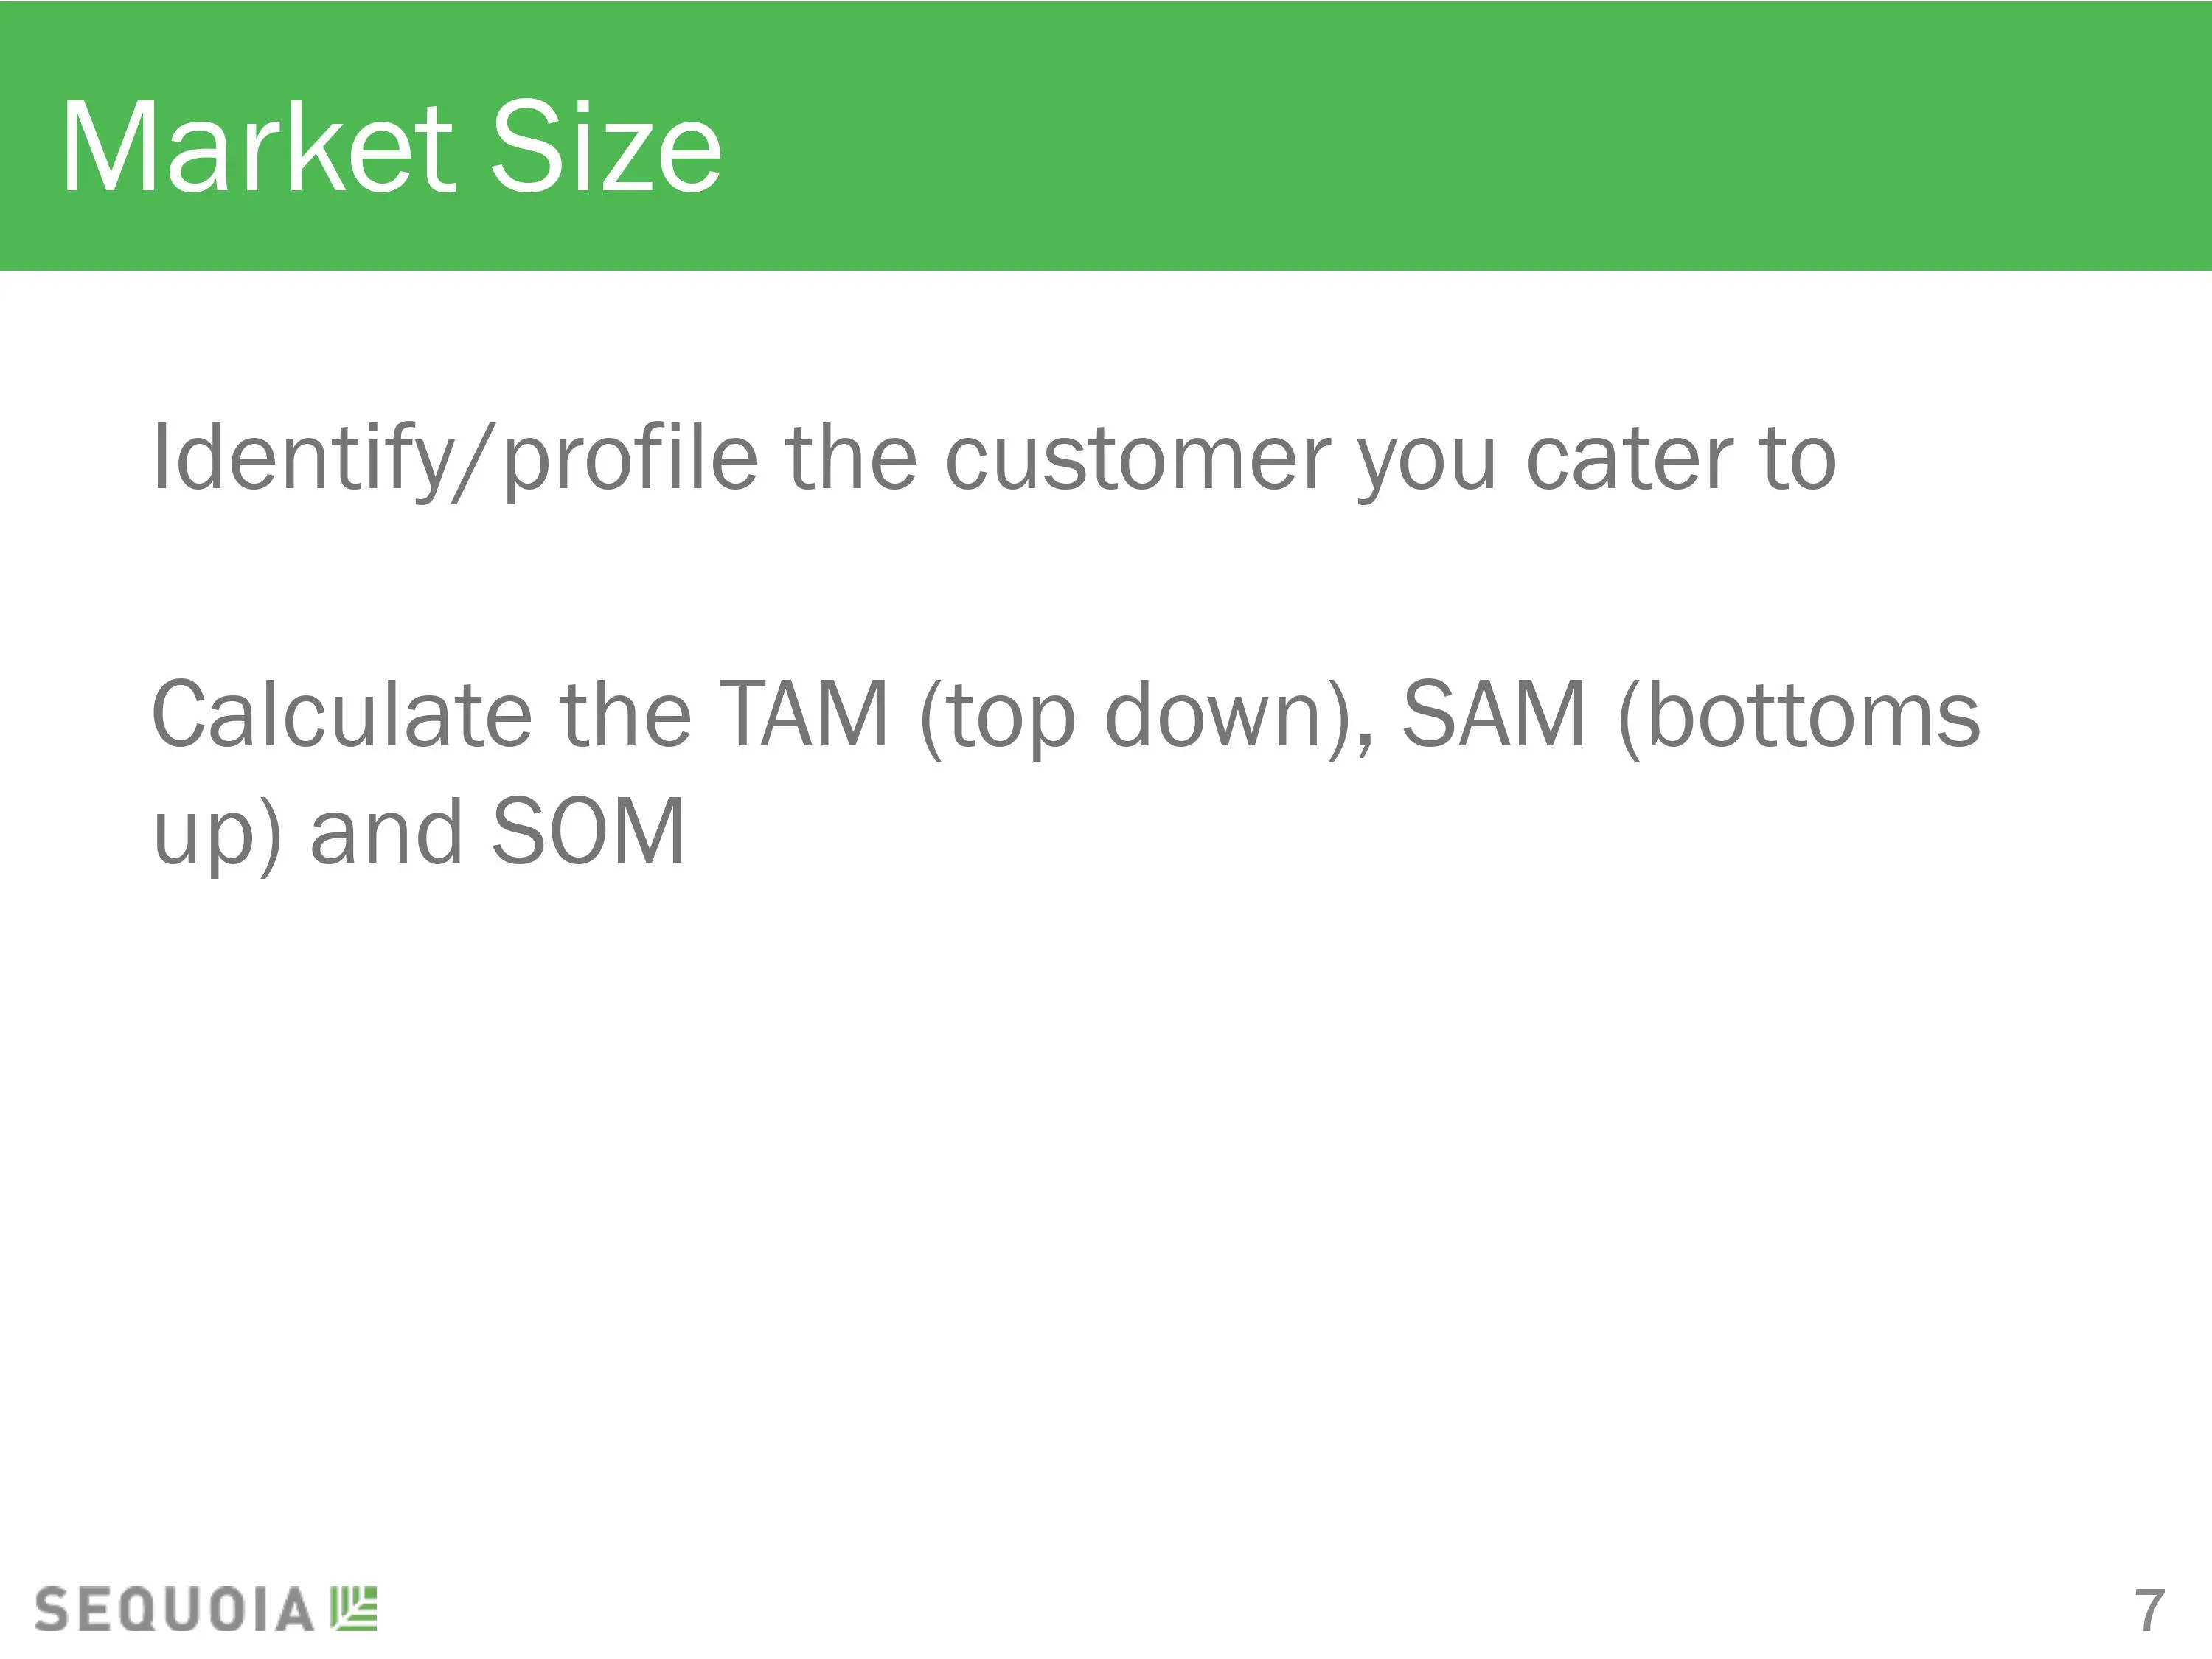 Sequoia Capital pitch deck template. Market Size slide.